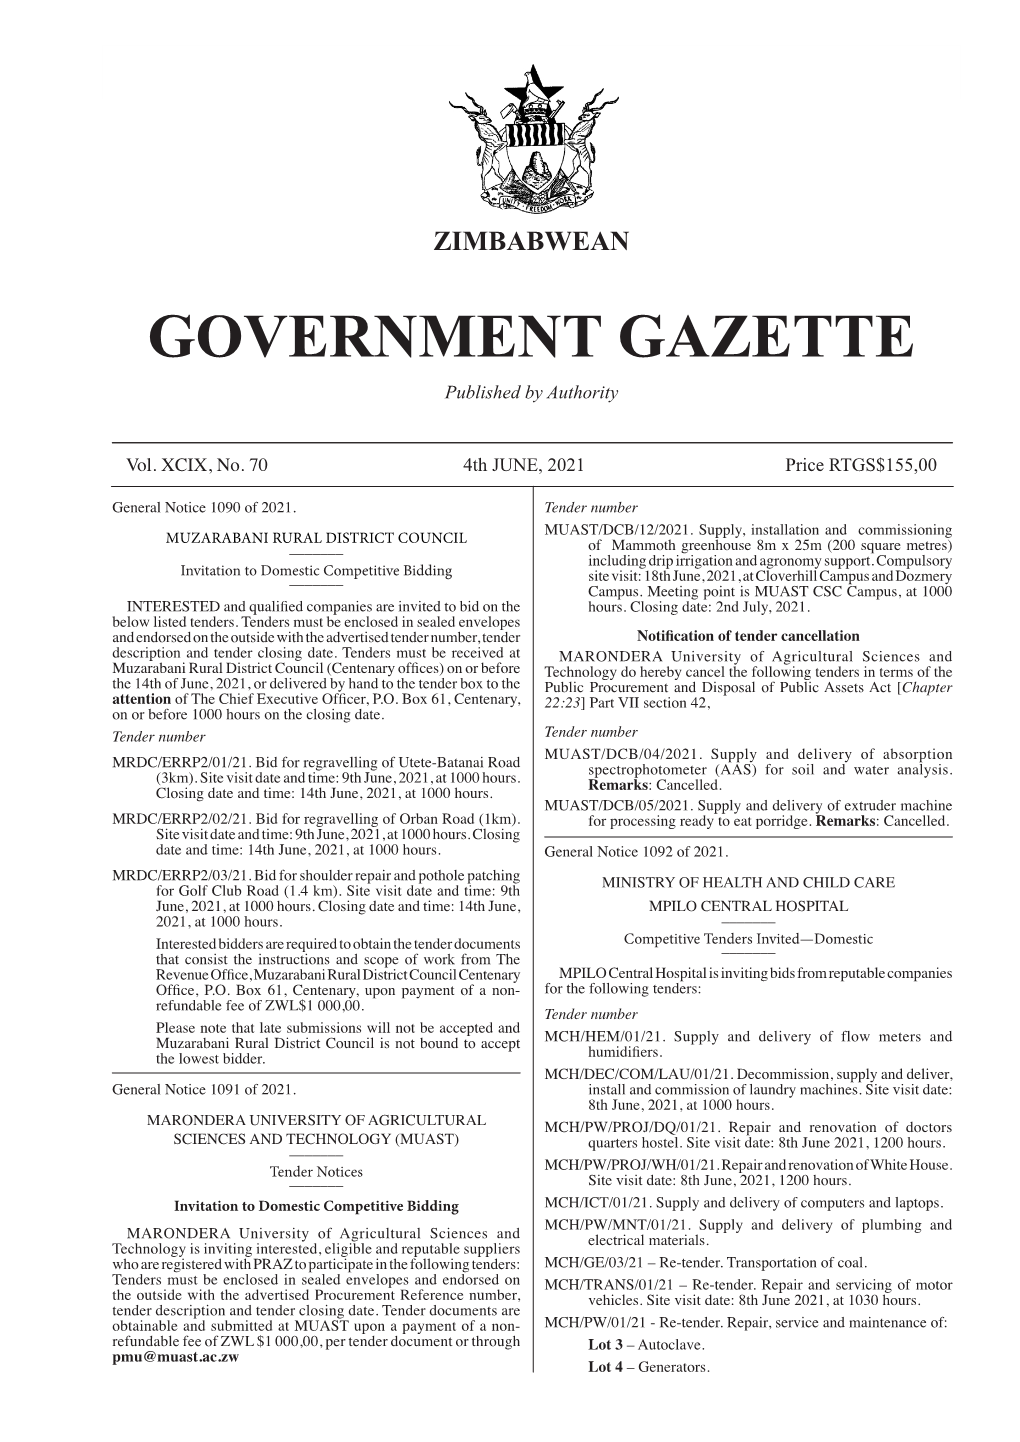 Government Gazette Extraordinary Vol. XCIX, No. 70